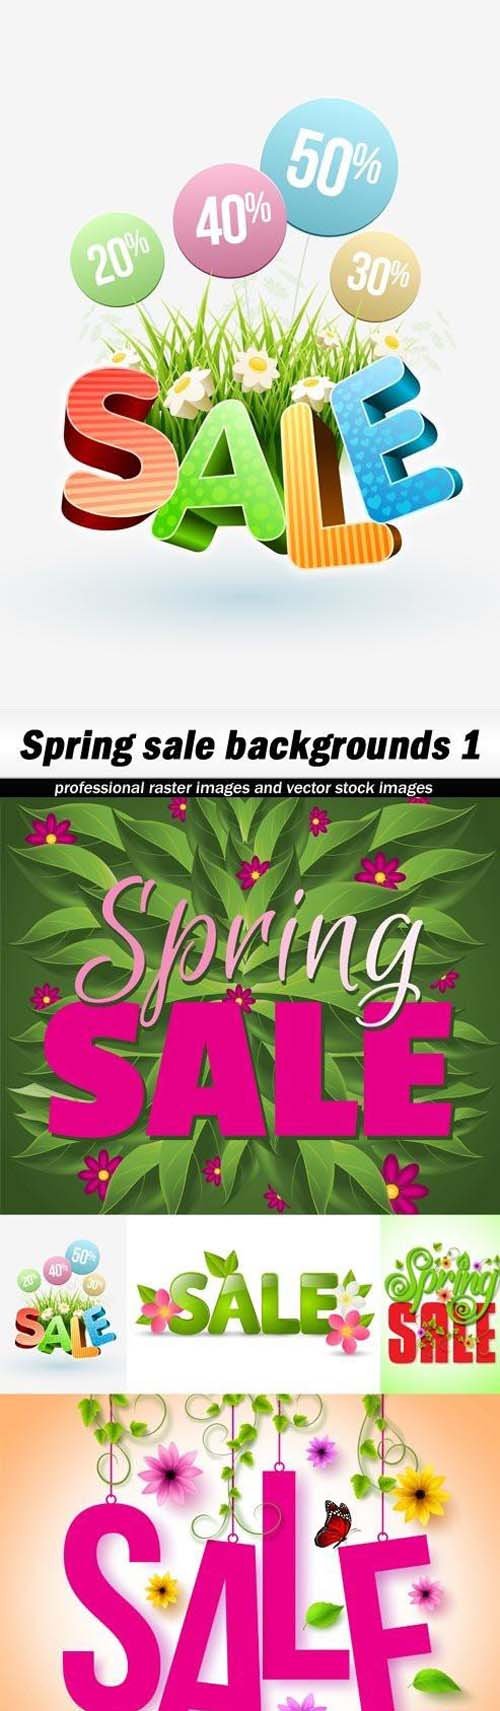 Spring sale backgrounds 1